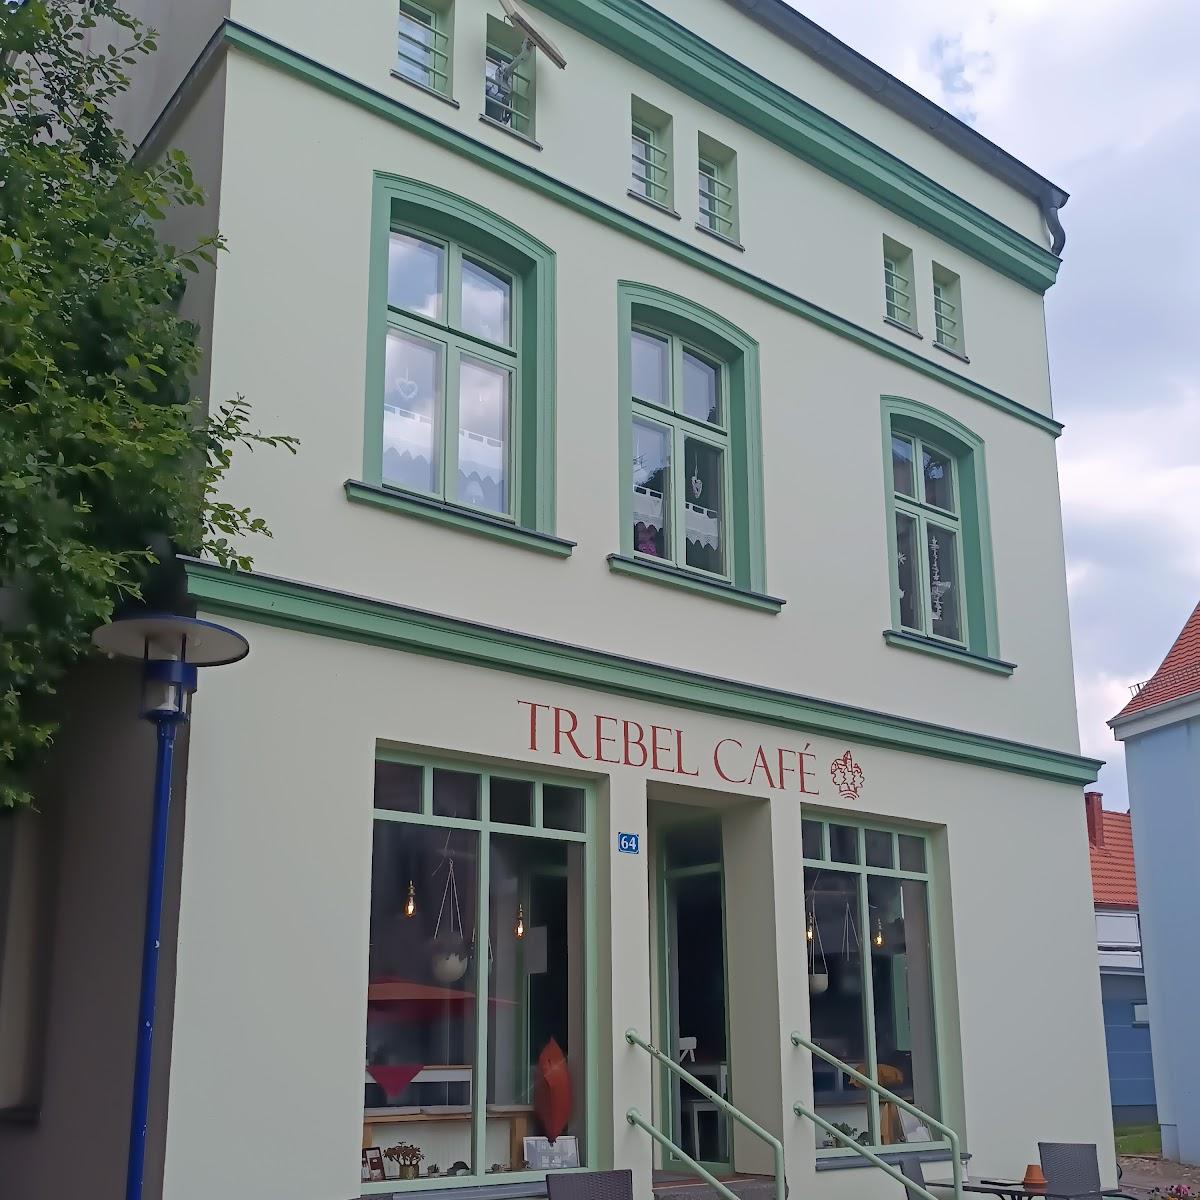 Restaurant "Trebel Café" in Tribsees